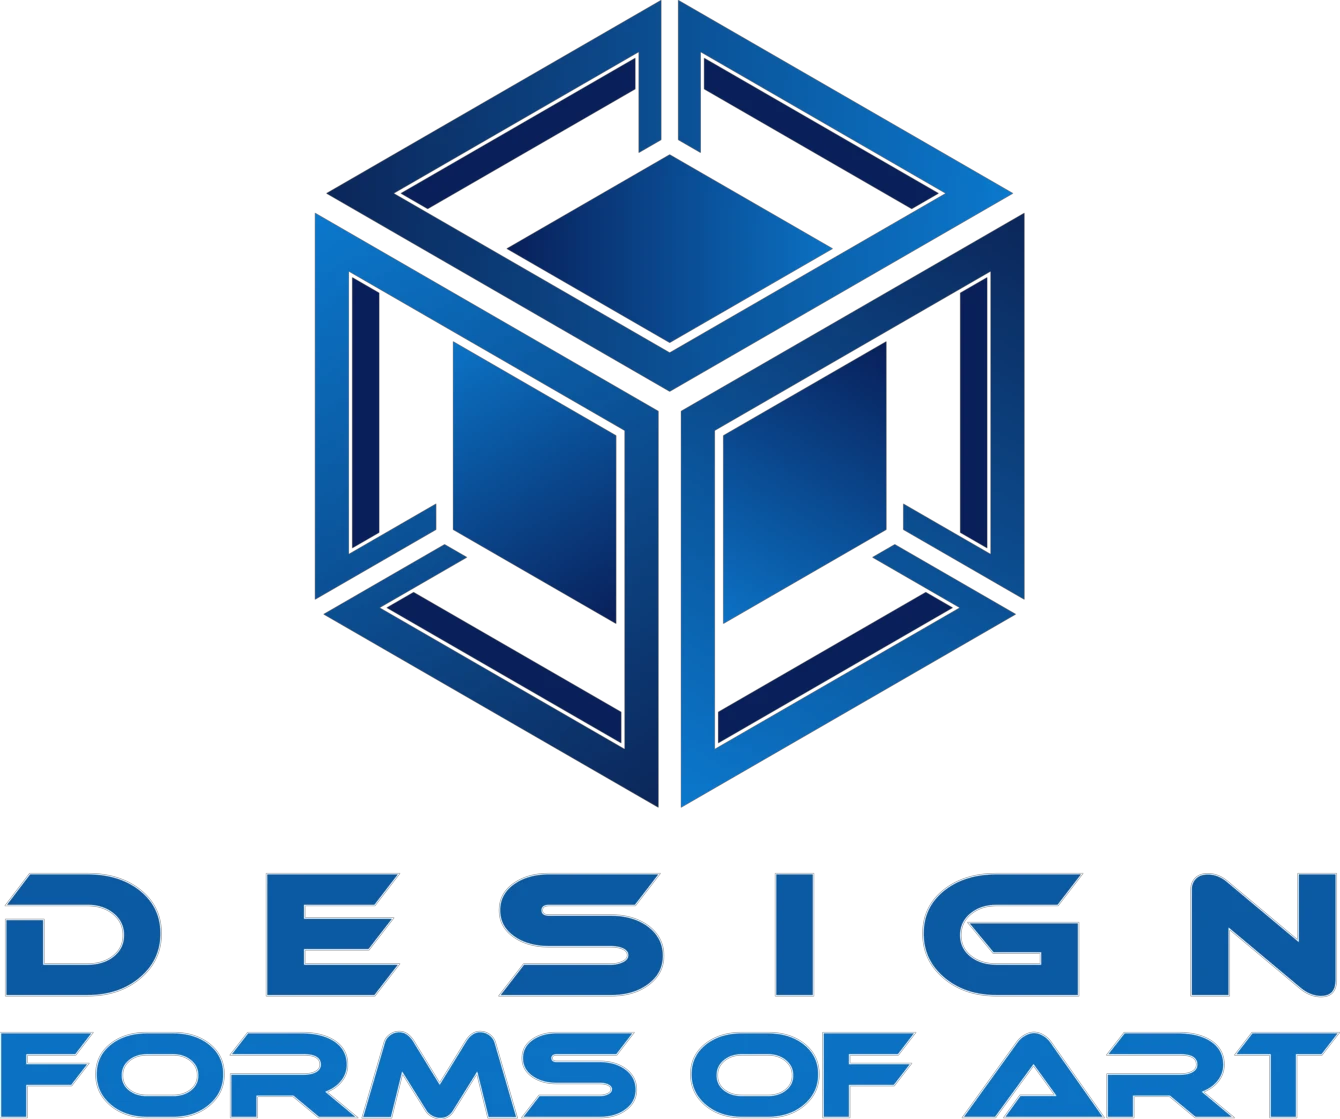 Design Forms Of Art 쿠폰 코드 